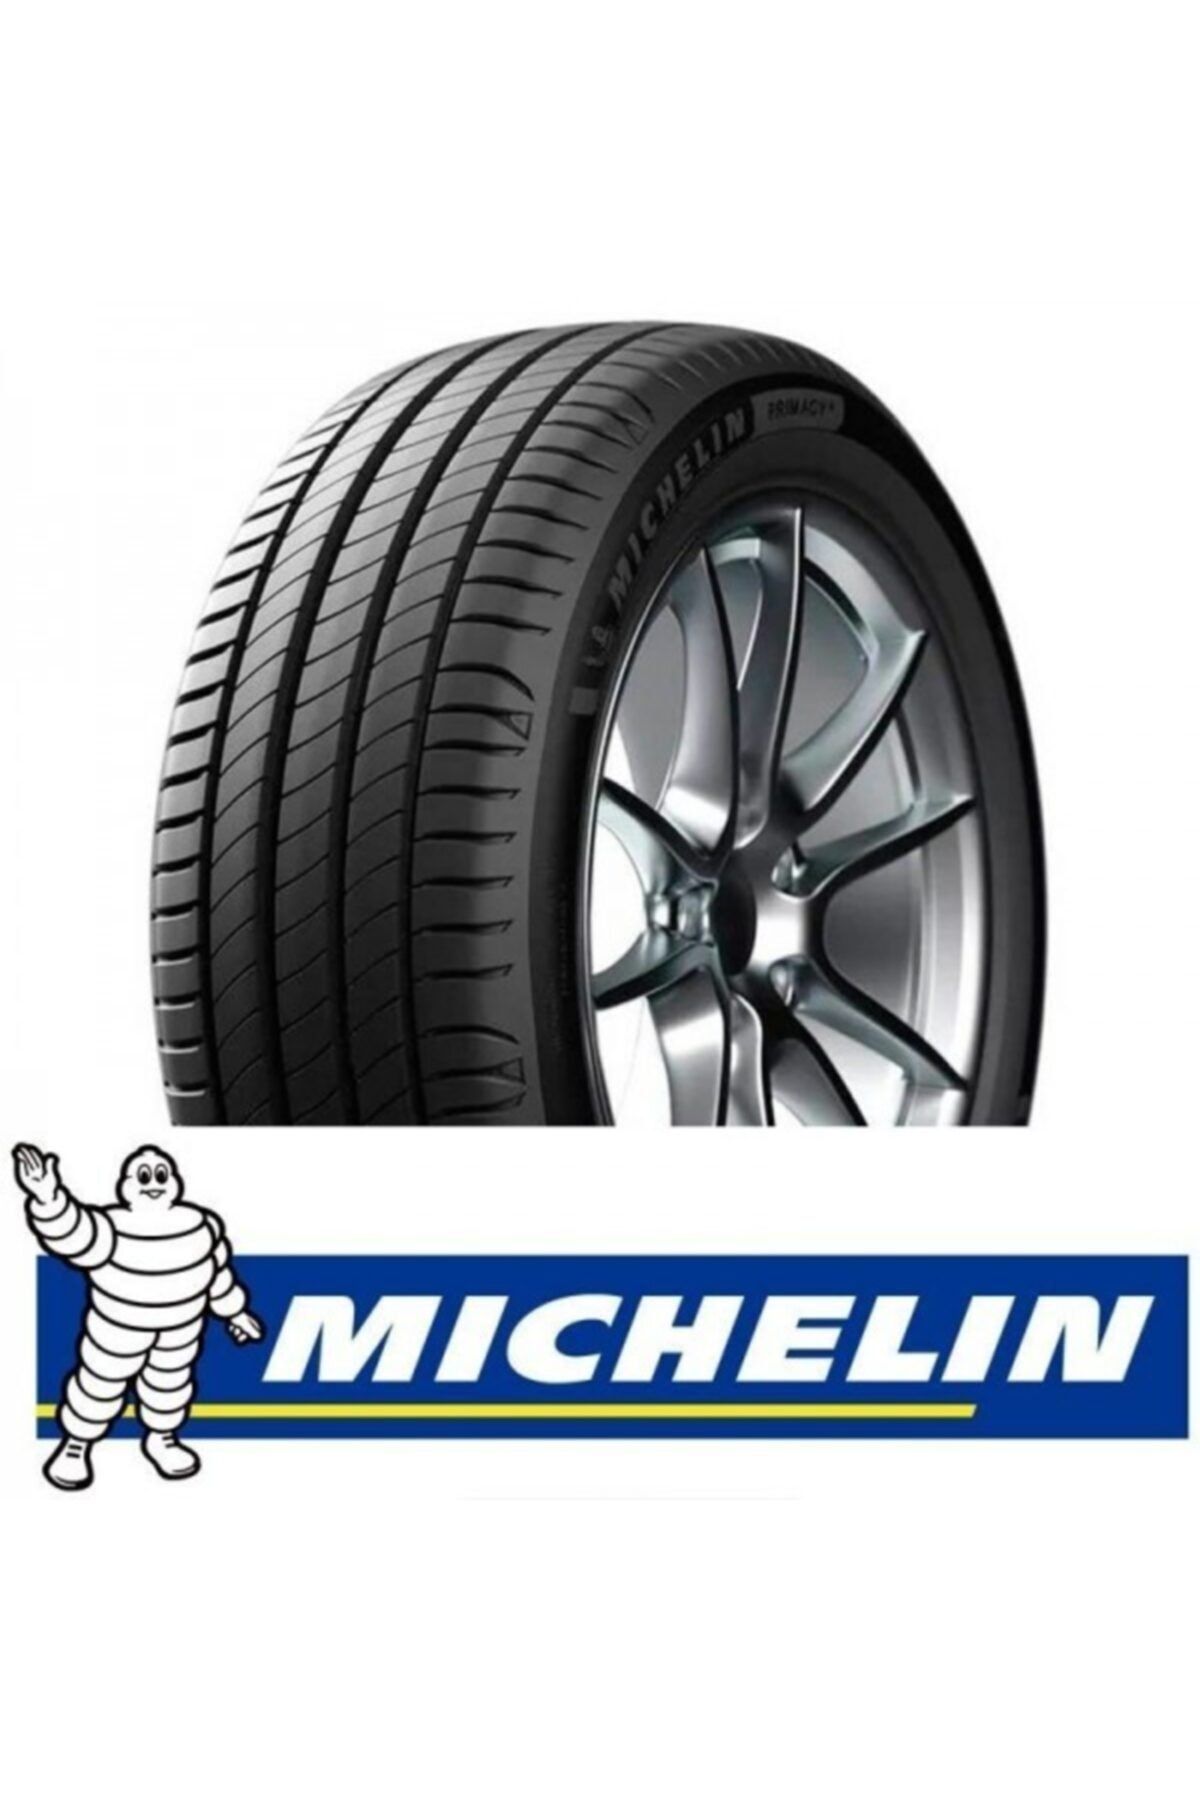 Michelin 205/55r16 91h Primacy 4 - 2021 Üretim - Yetkili Bayii